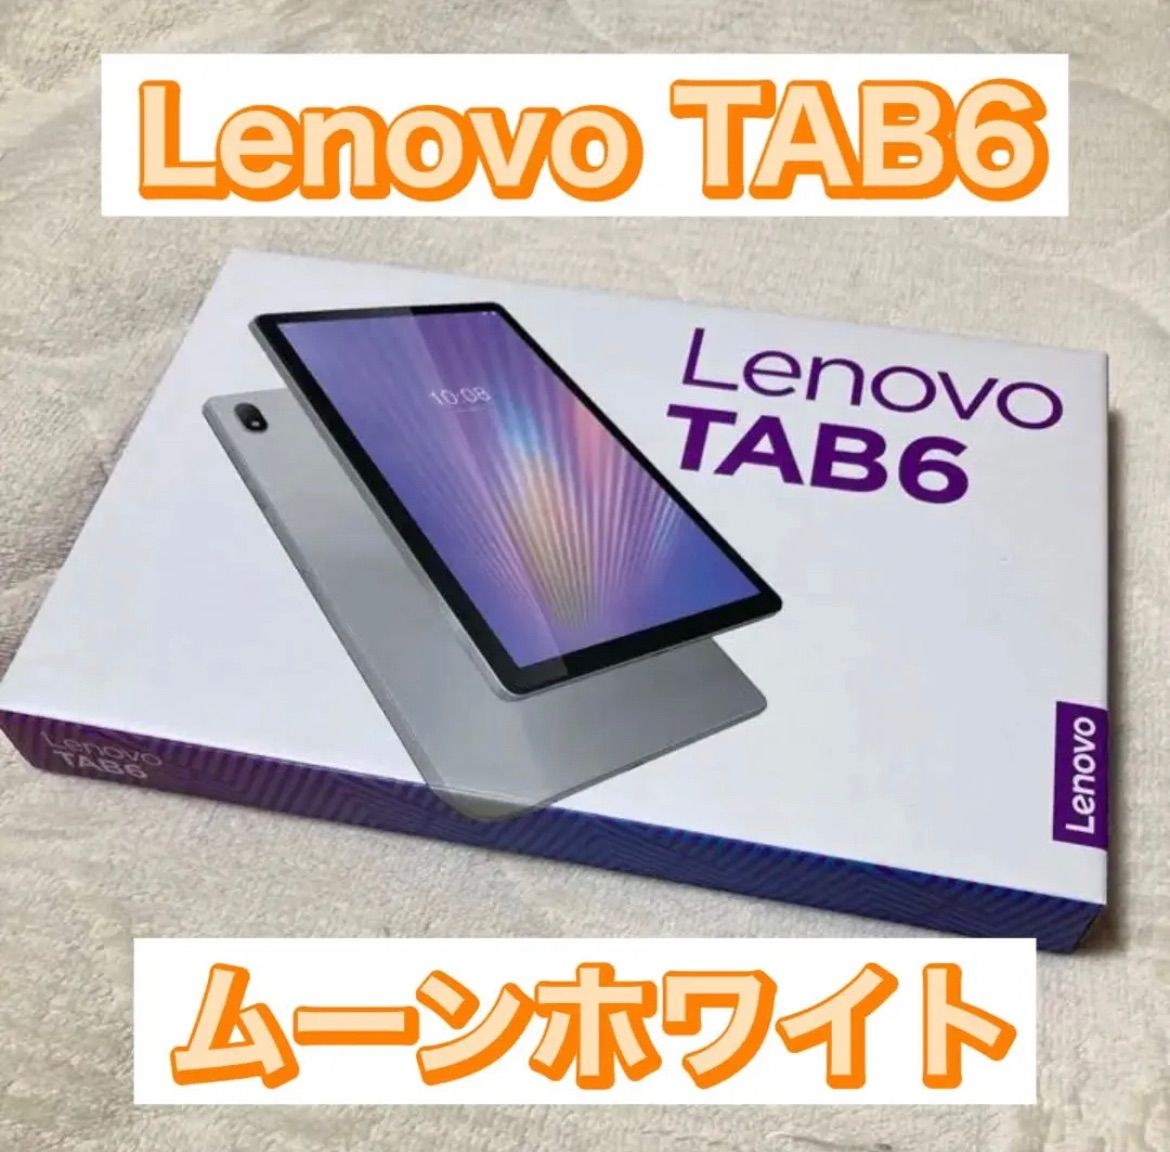 Lenovo TAB6 ムーンホワイト【開封のみ新品】